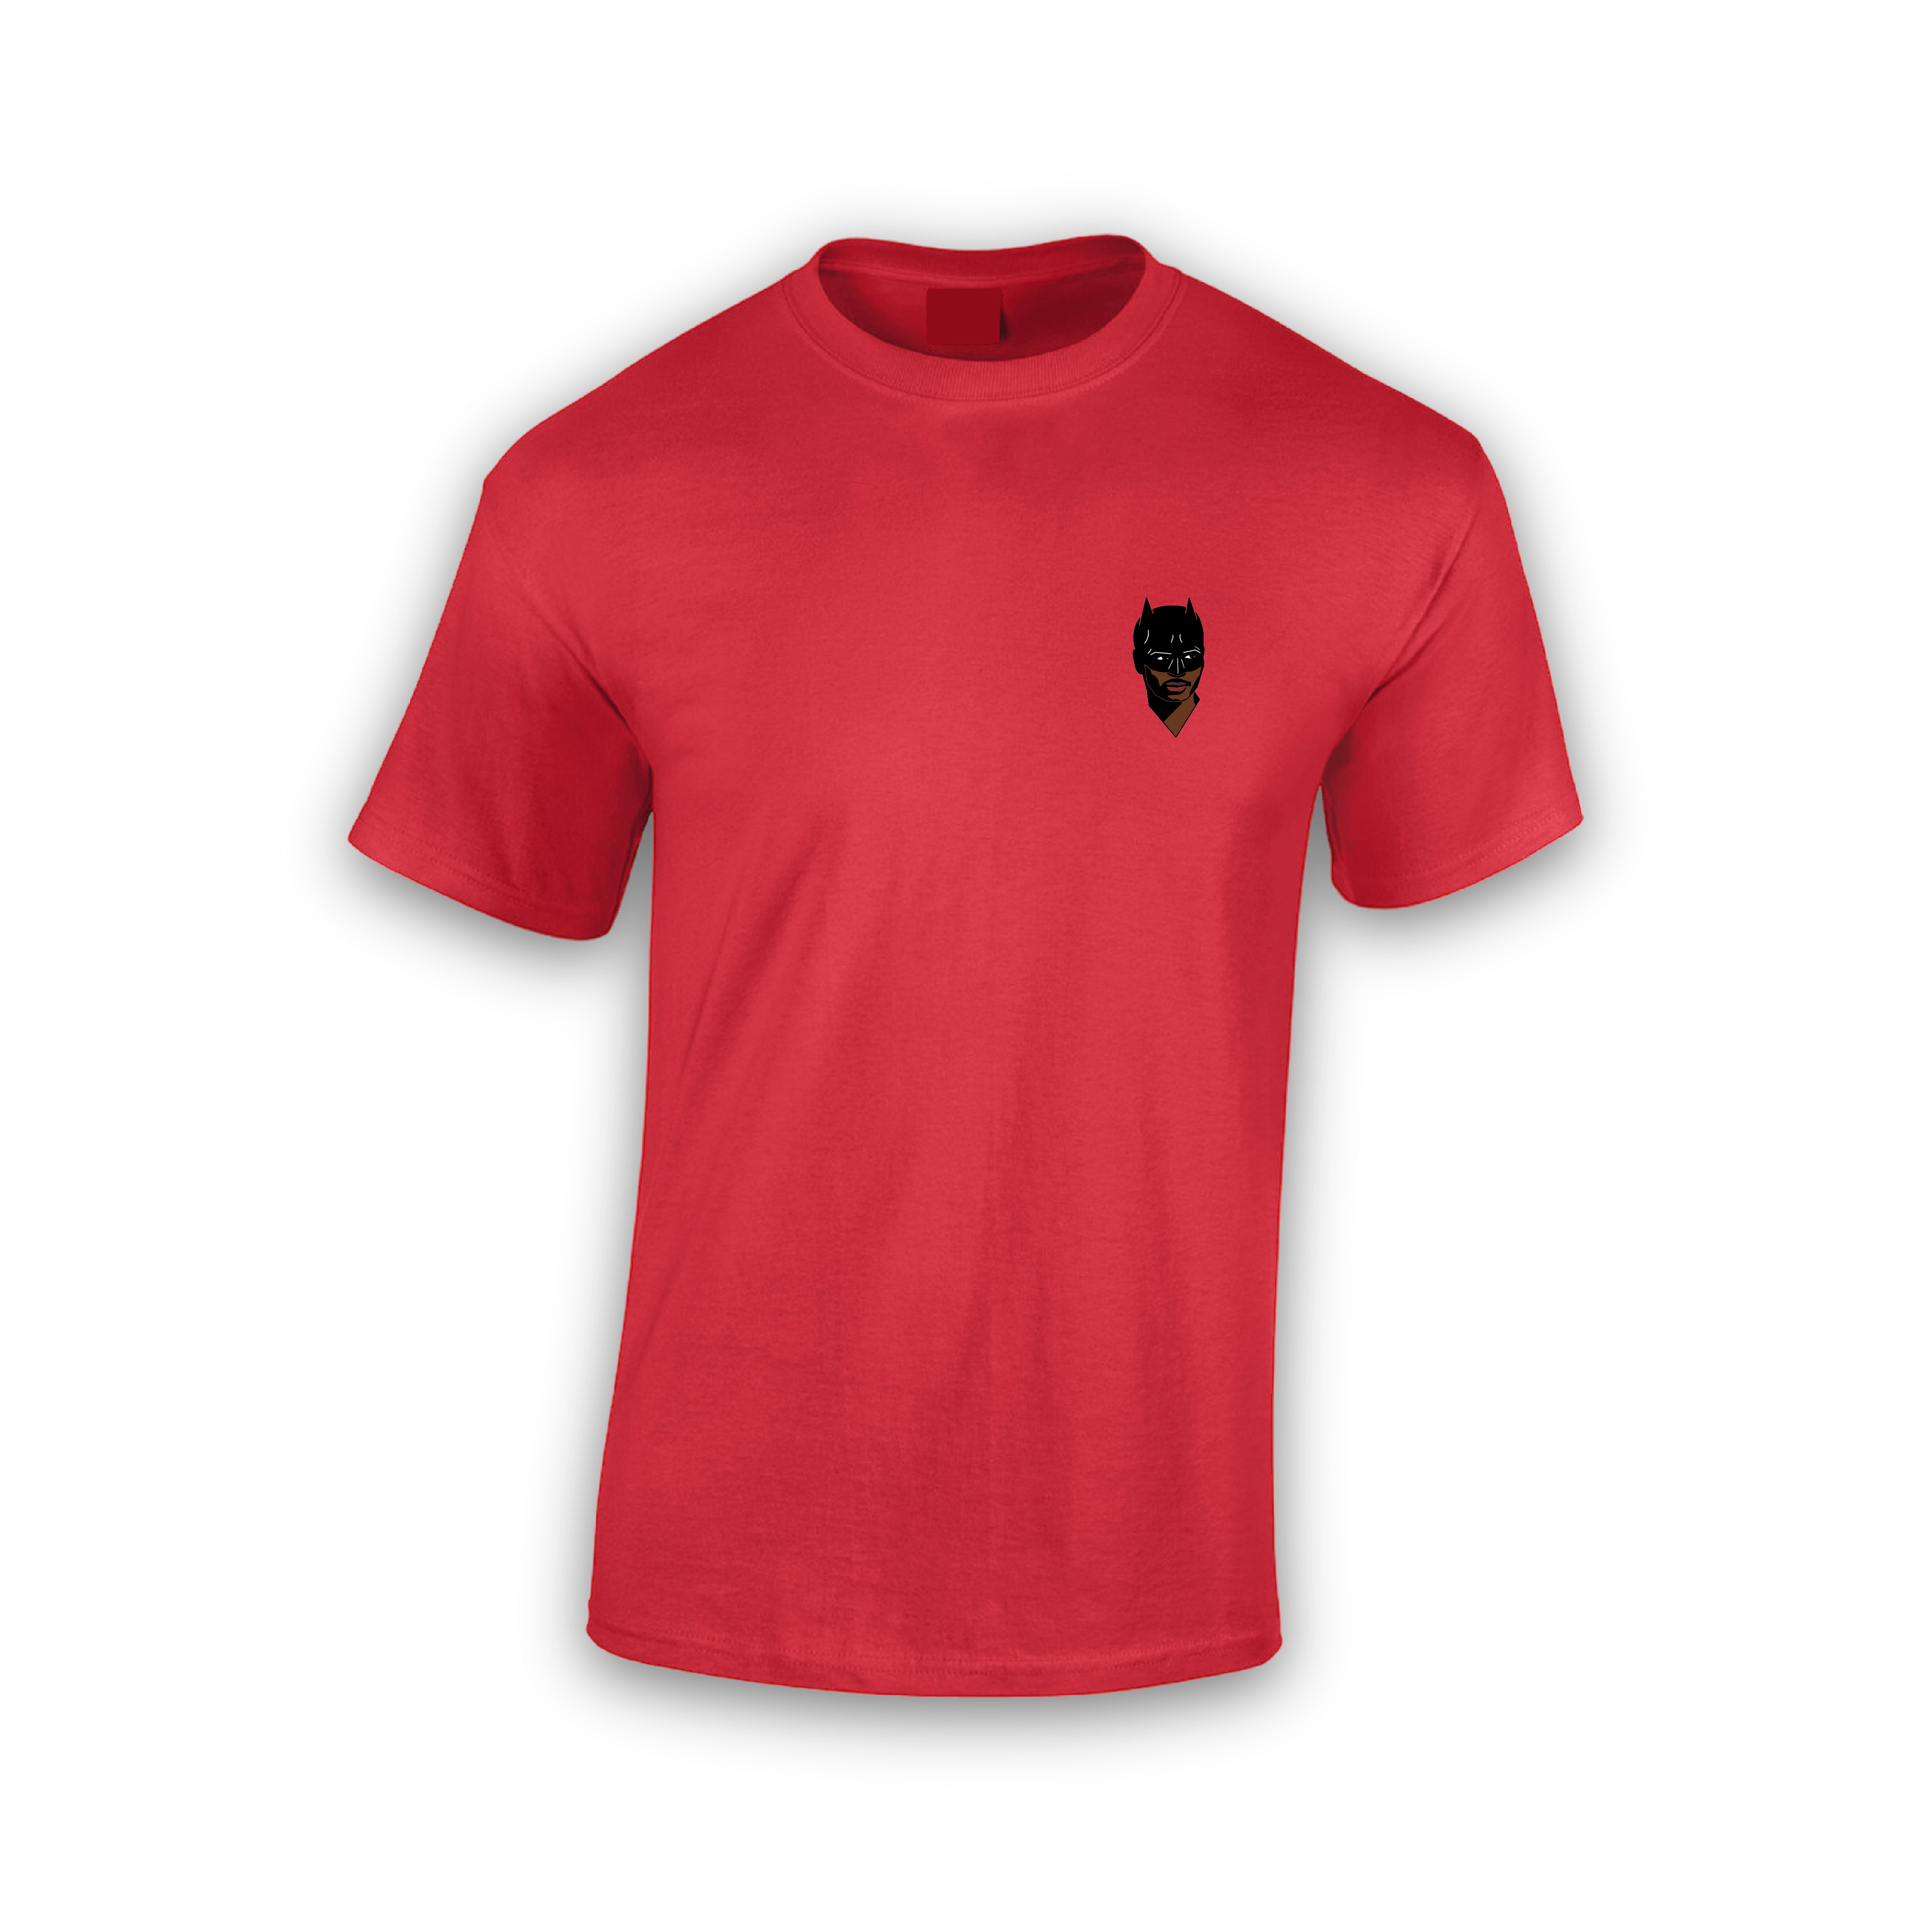 OnlyVarro Vengeance T-shirt Red Small